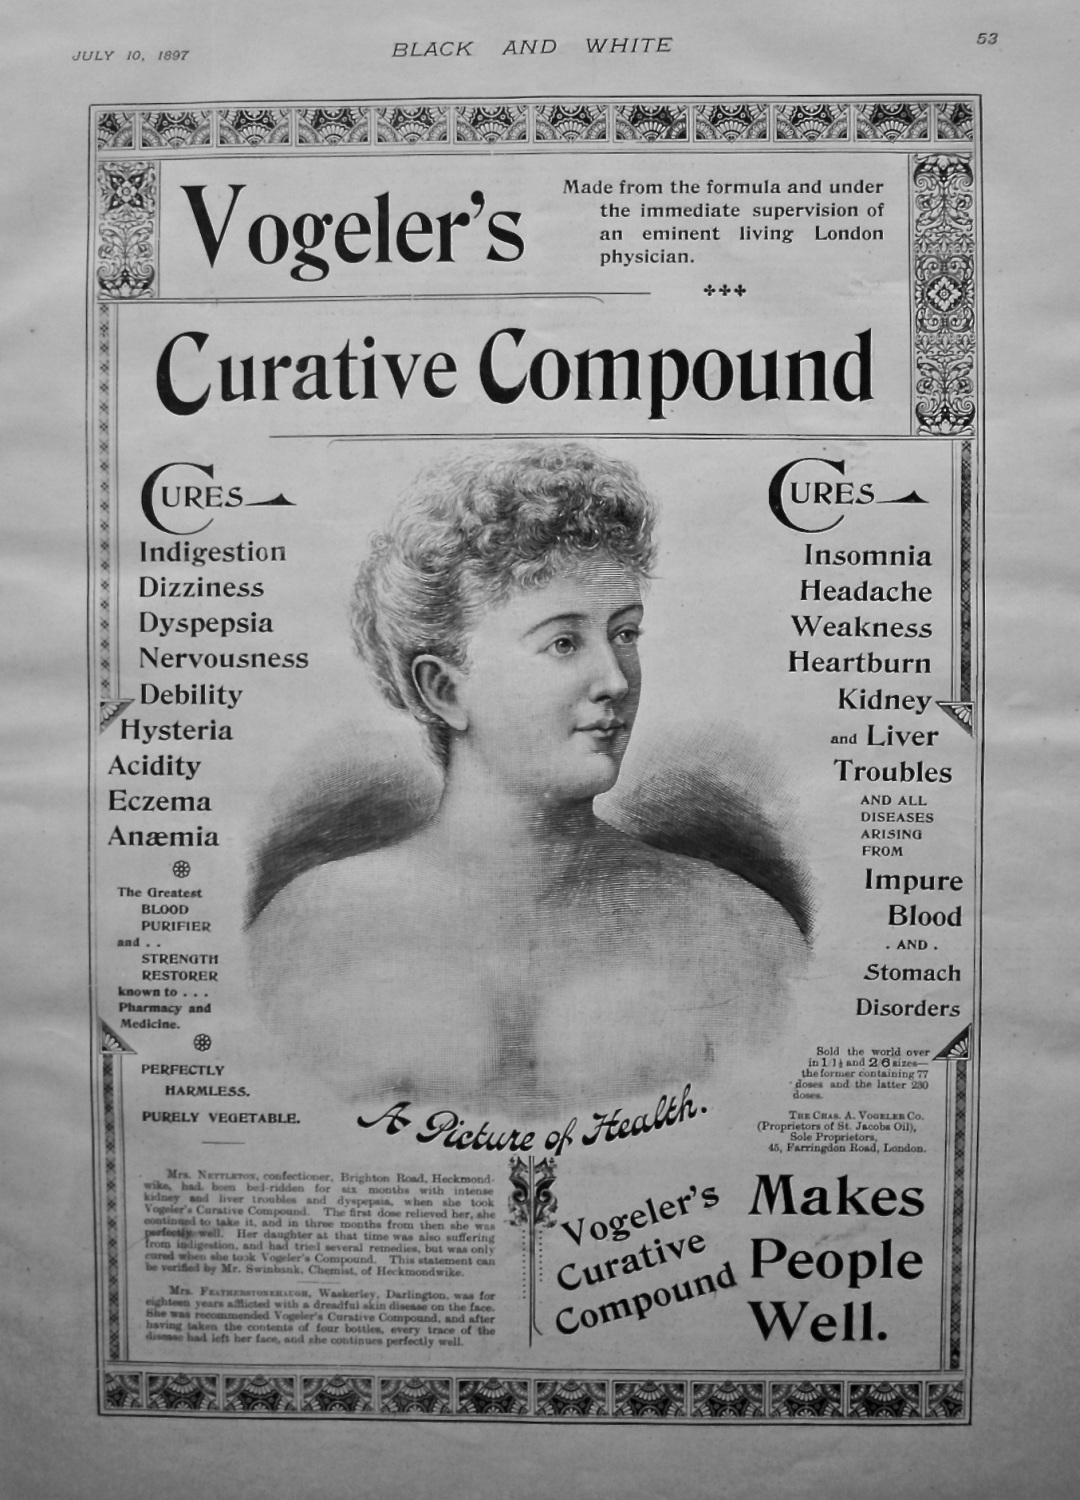 Vogeler's Curative Compound. 1897.